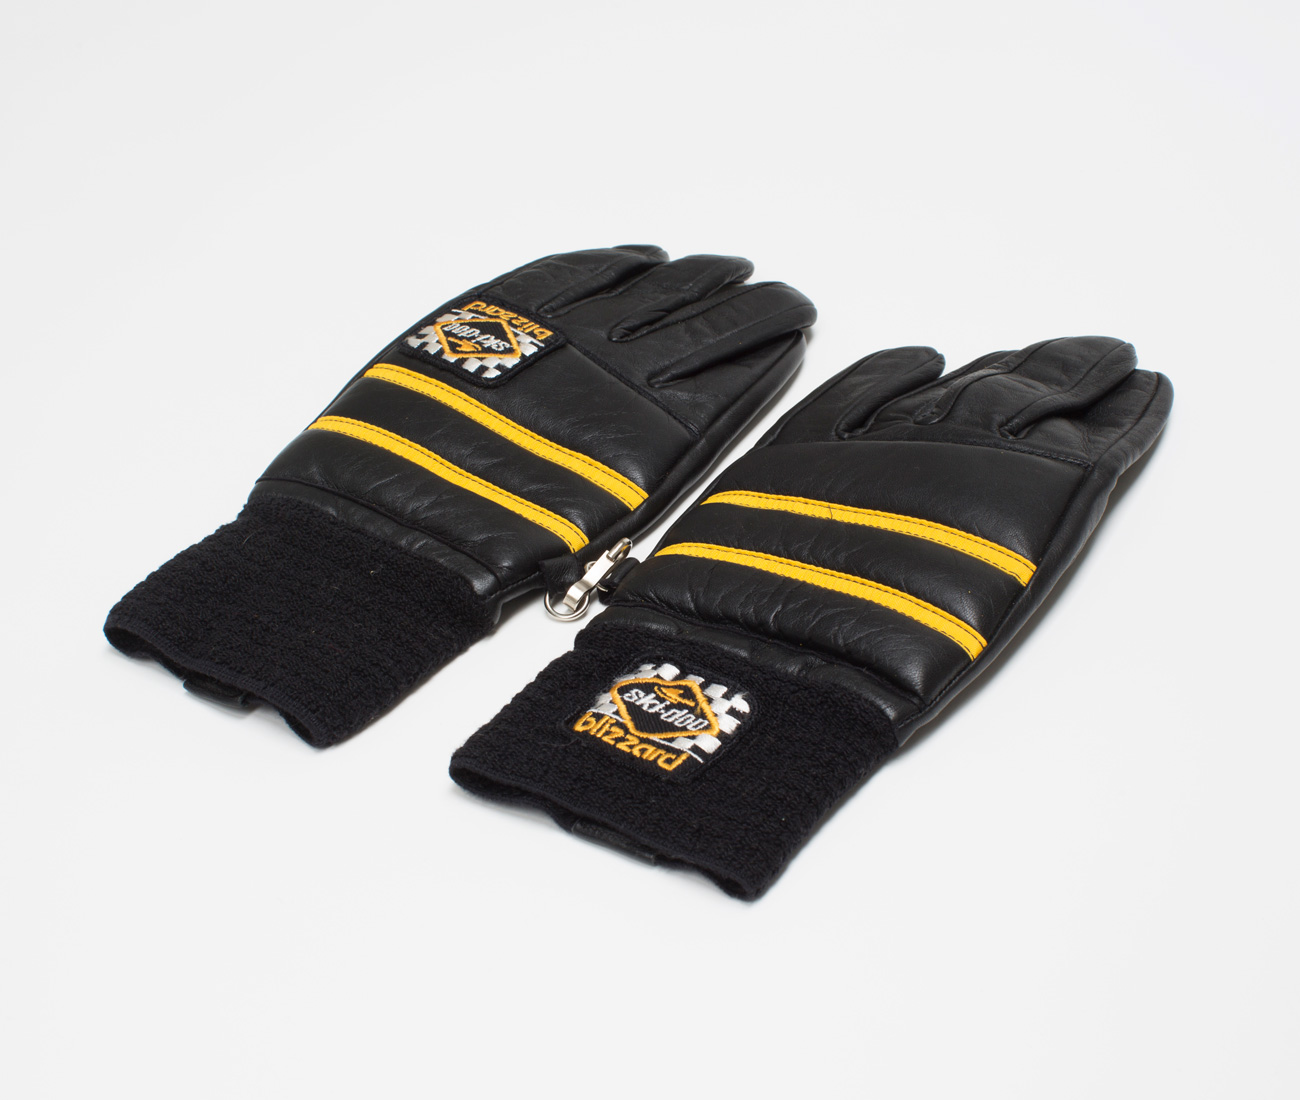 Leather Ski-Doo gloves.